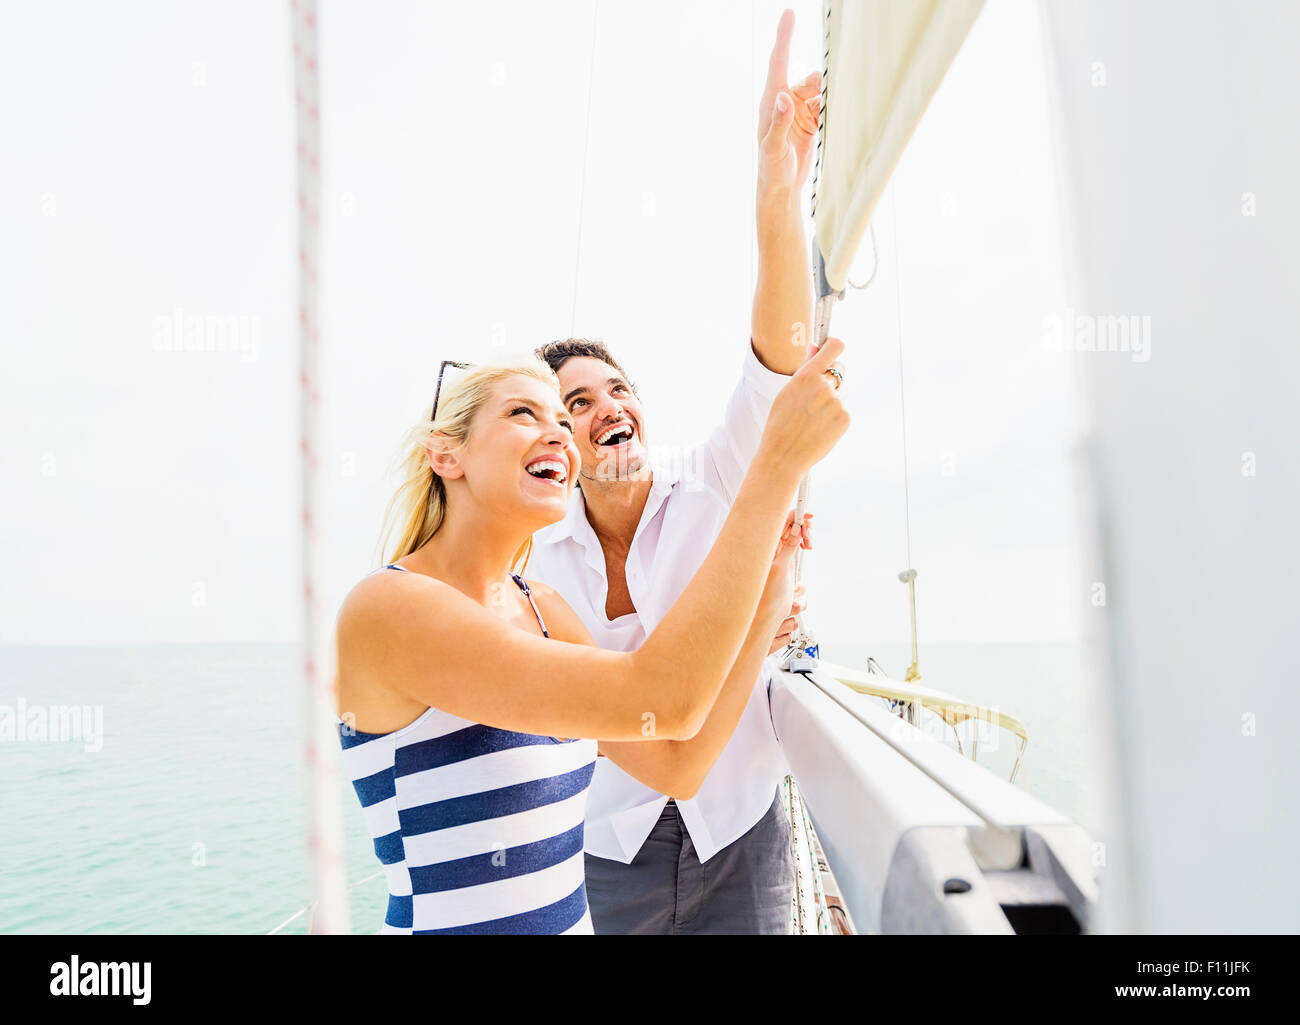 Couple adjusting rigging on sailboat Stock Photo